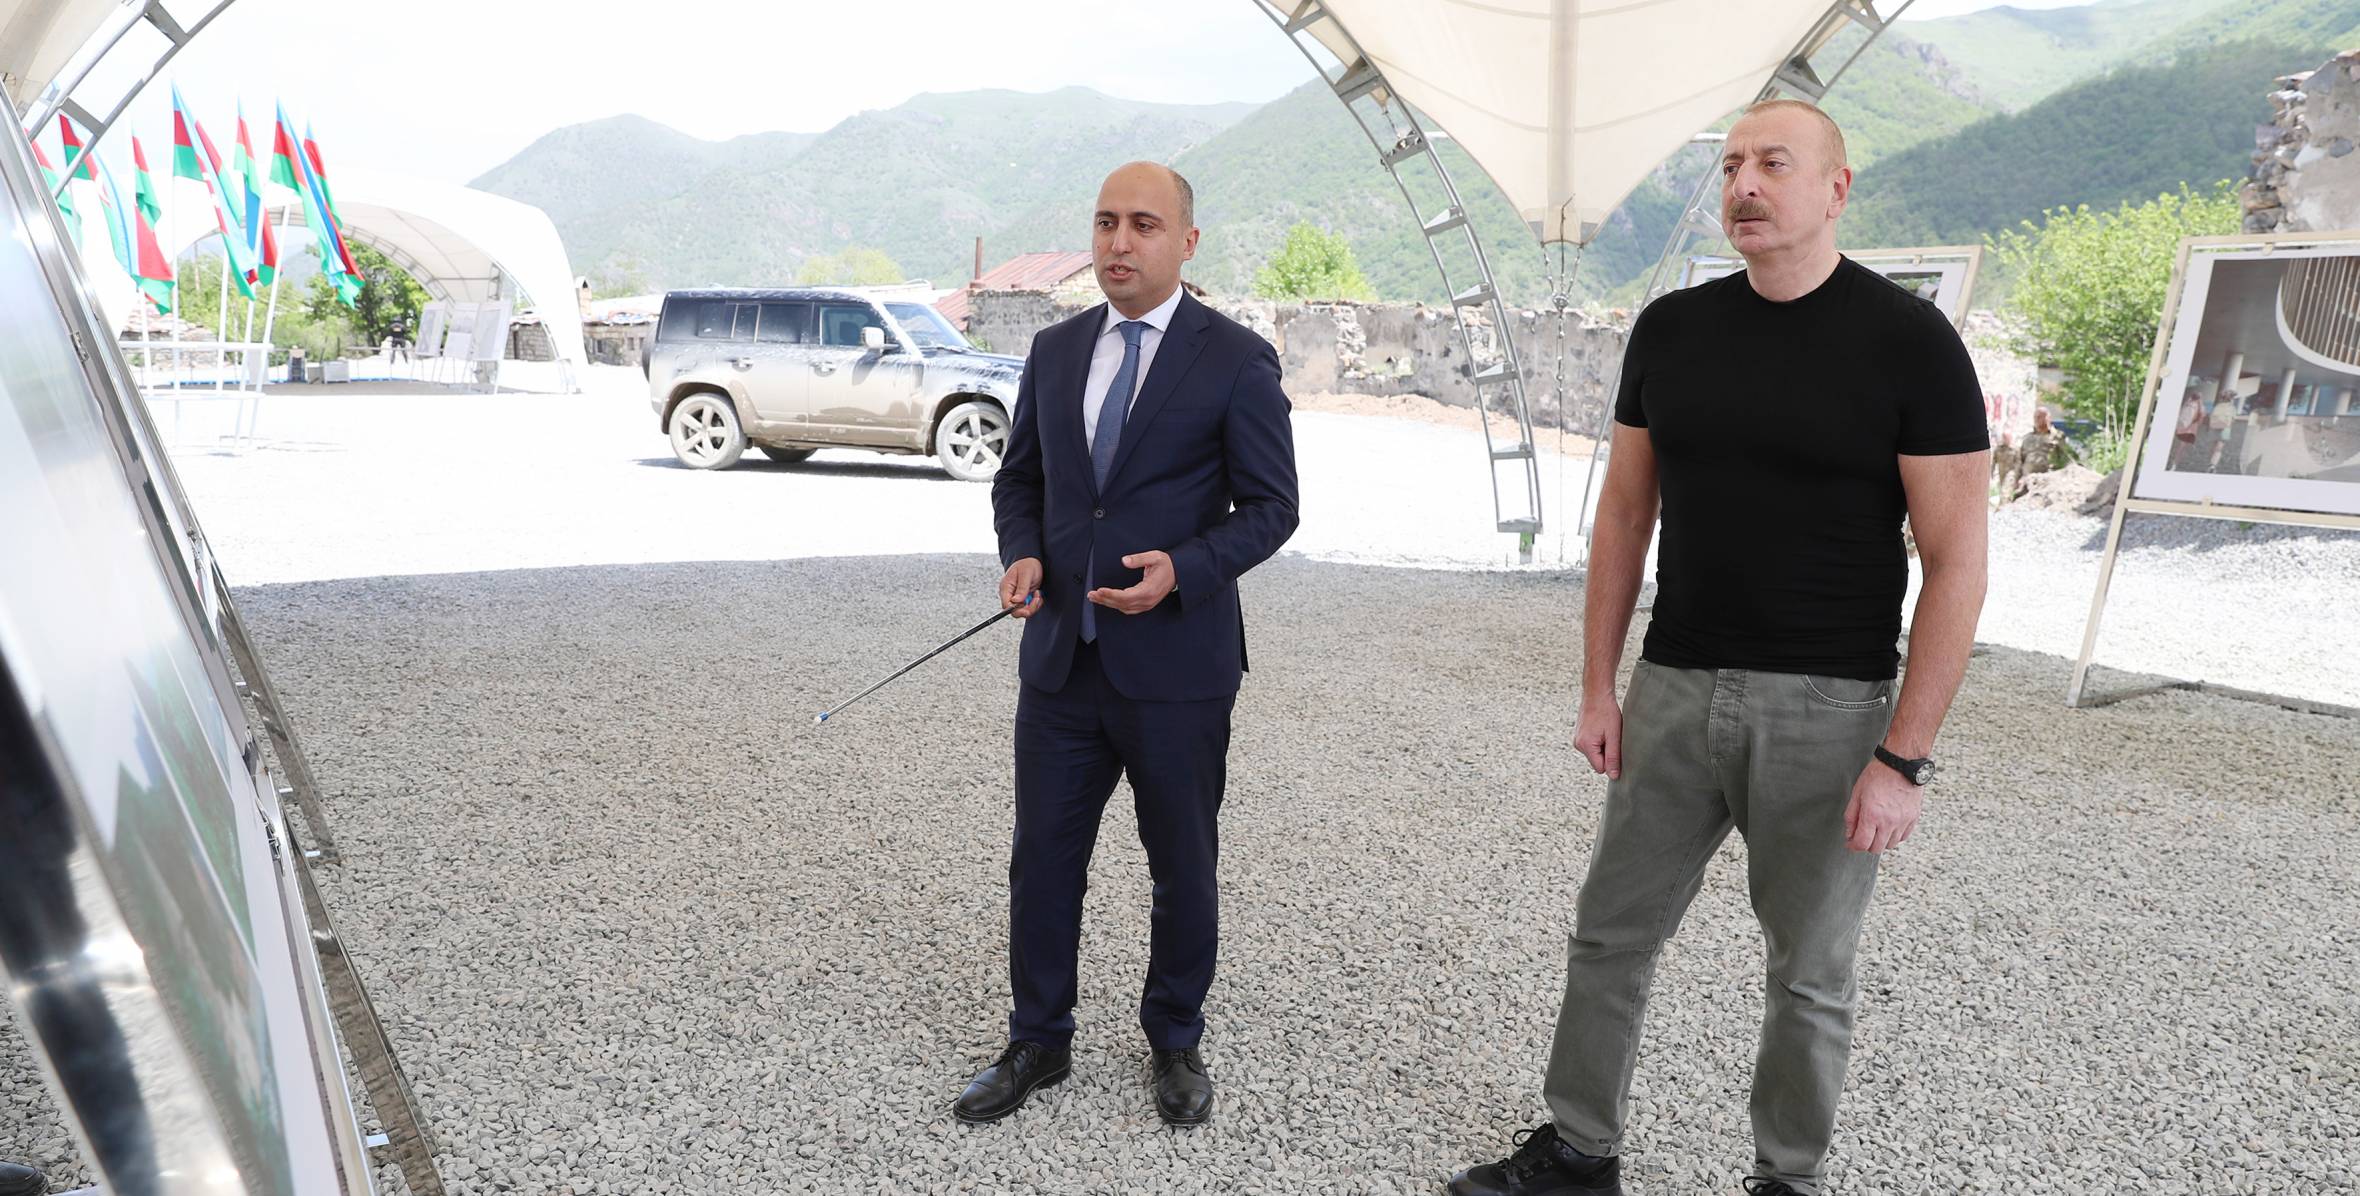 Ilham Aliyev laid foundation stone for school in city of Kalbajar